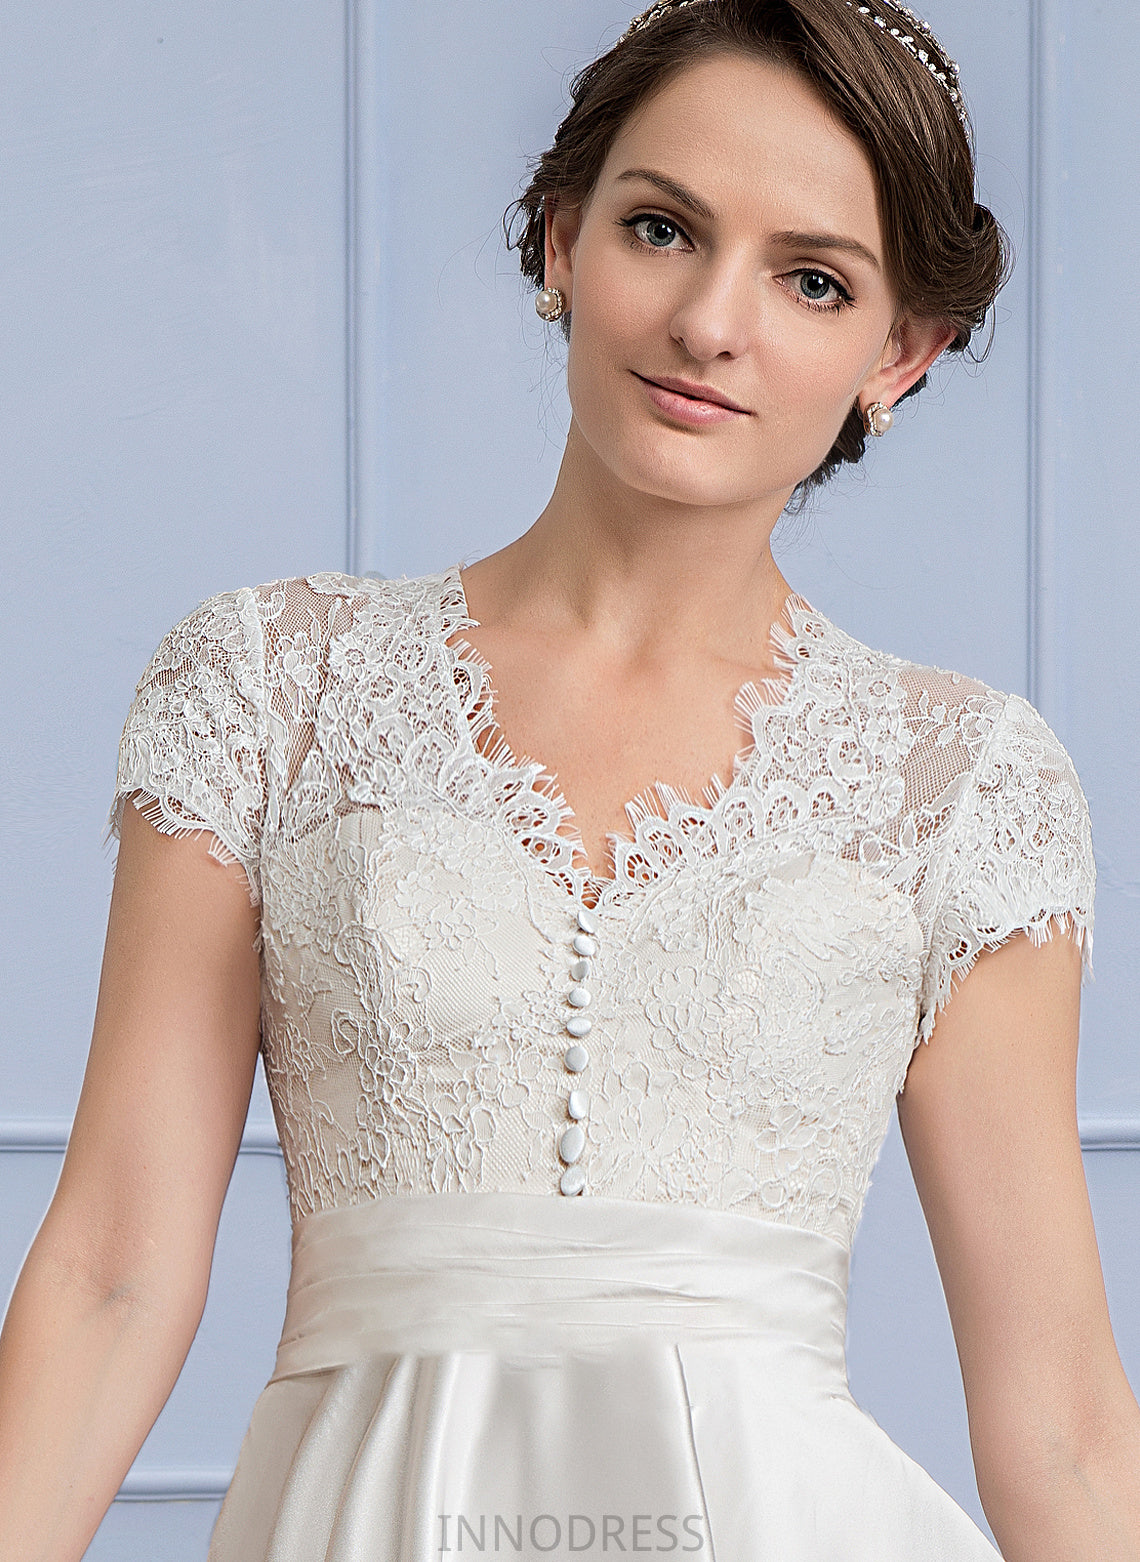 A-Line Wedding Dresses Dress V-neck Tea-Length Wedding Sage Ruffle Pockets With Satin